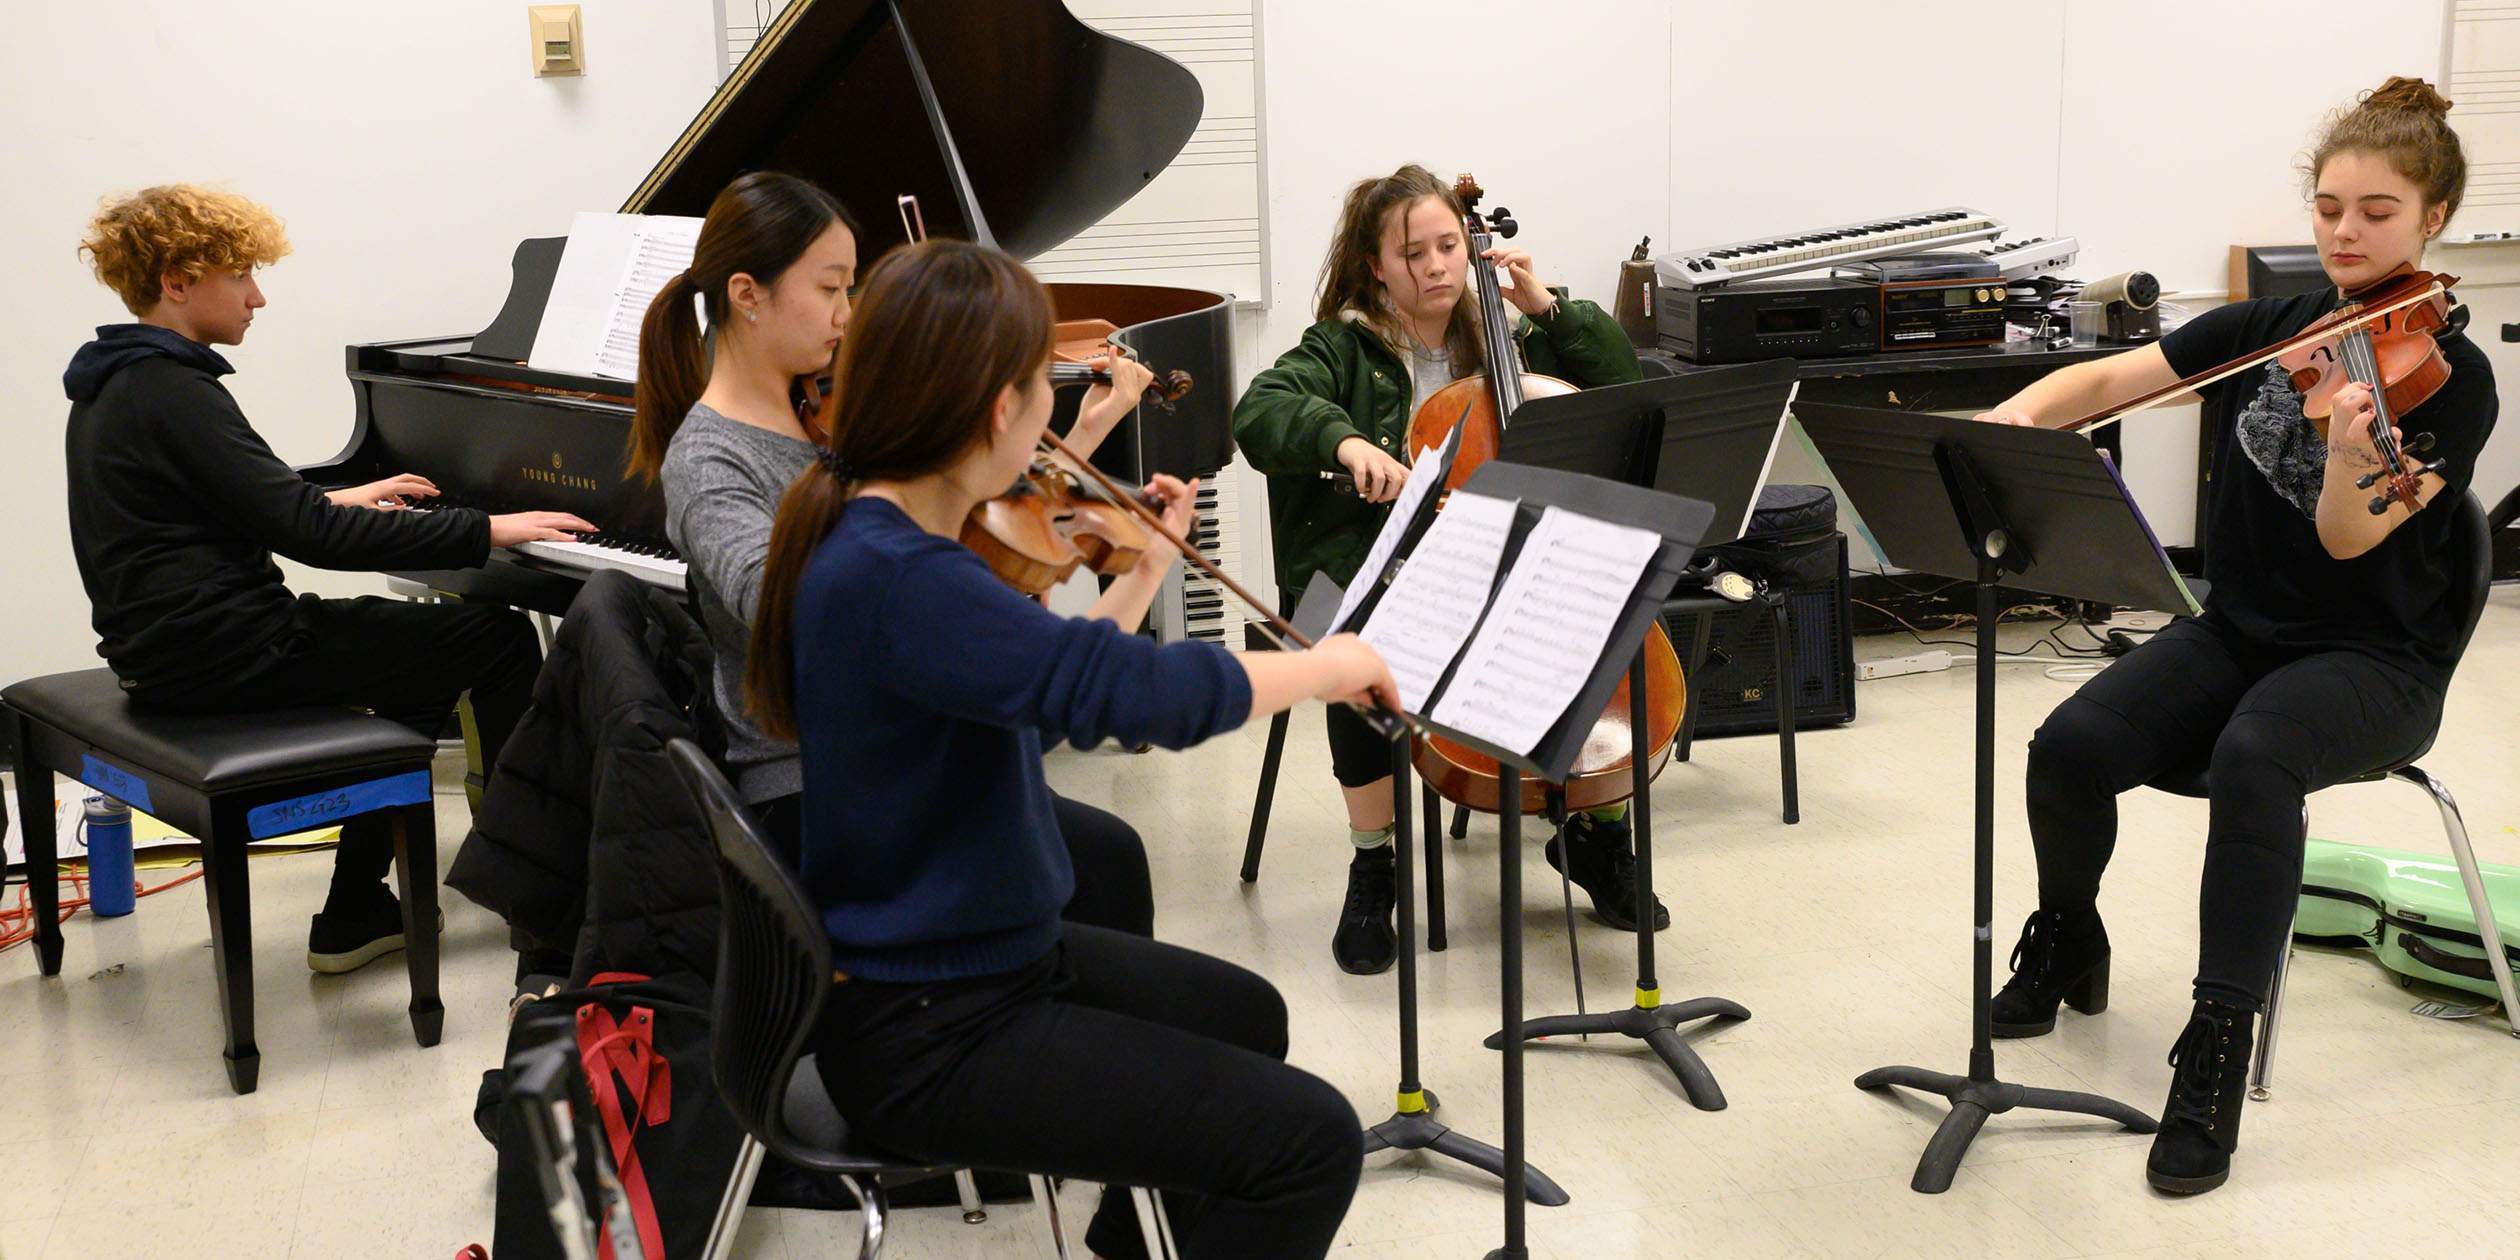 A NYC K-12 Public School That Teaches Music as a Core Subject